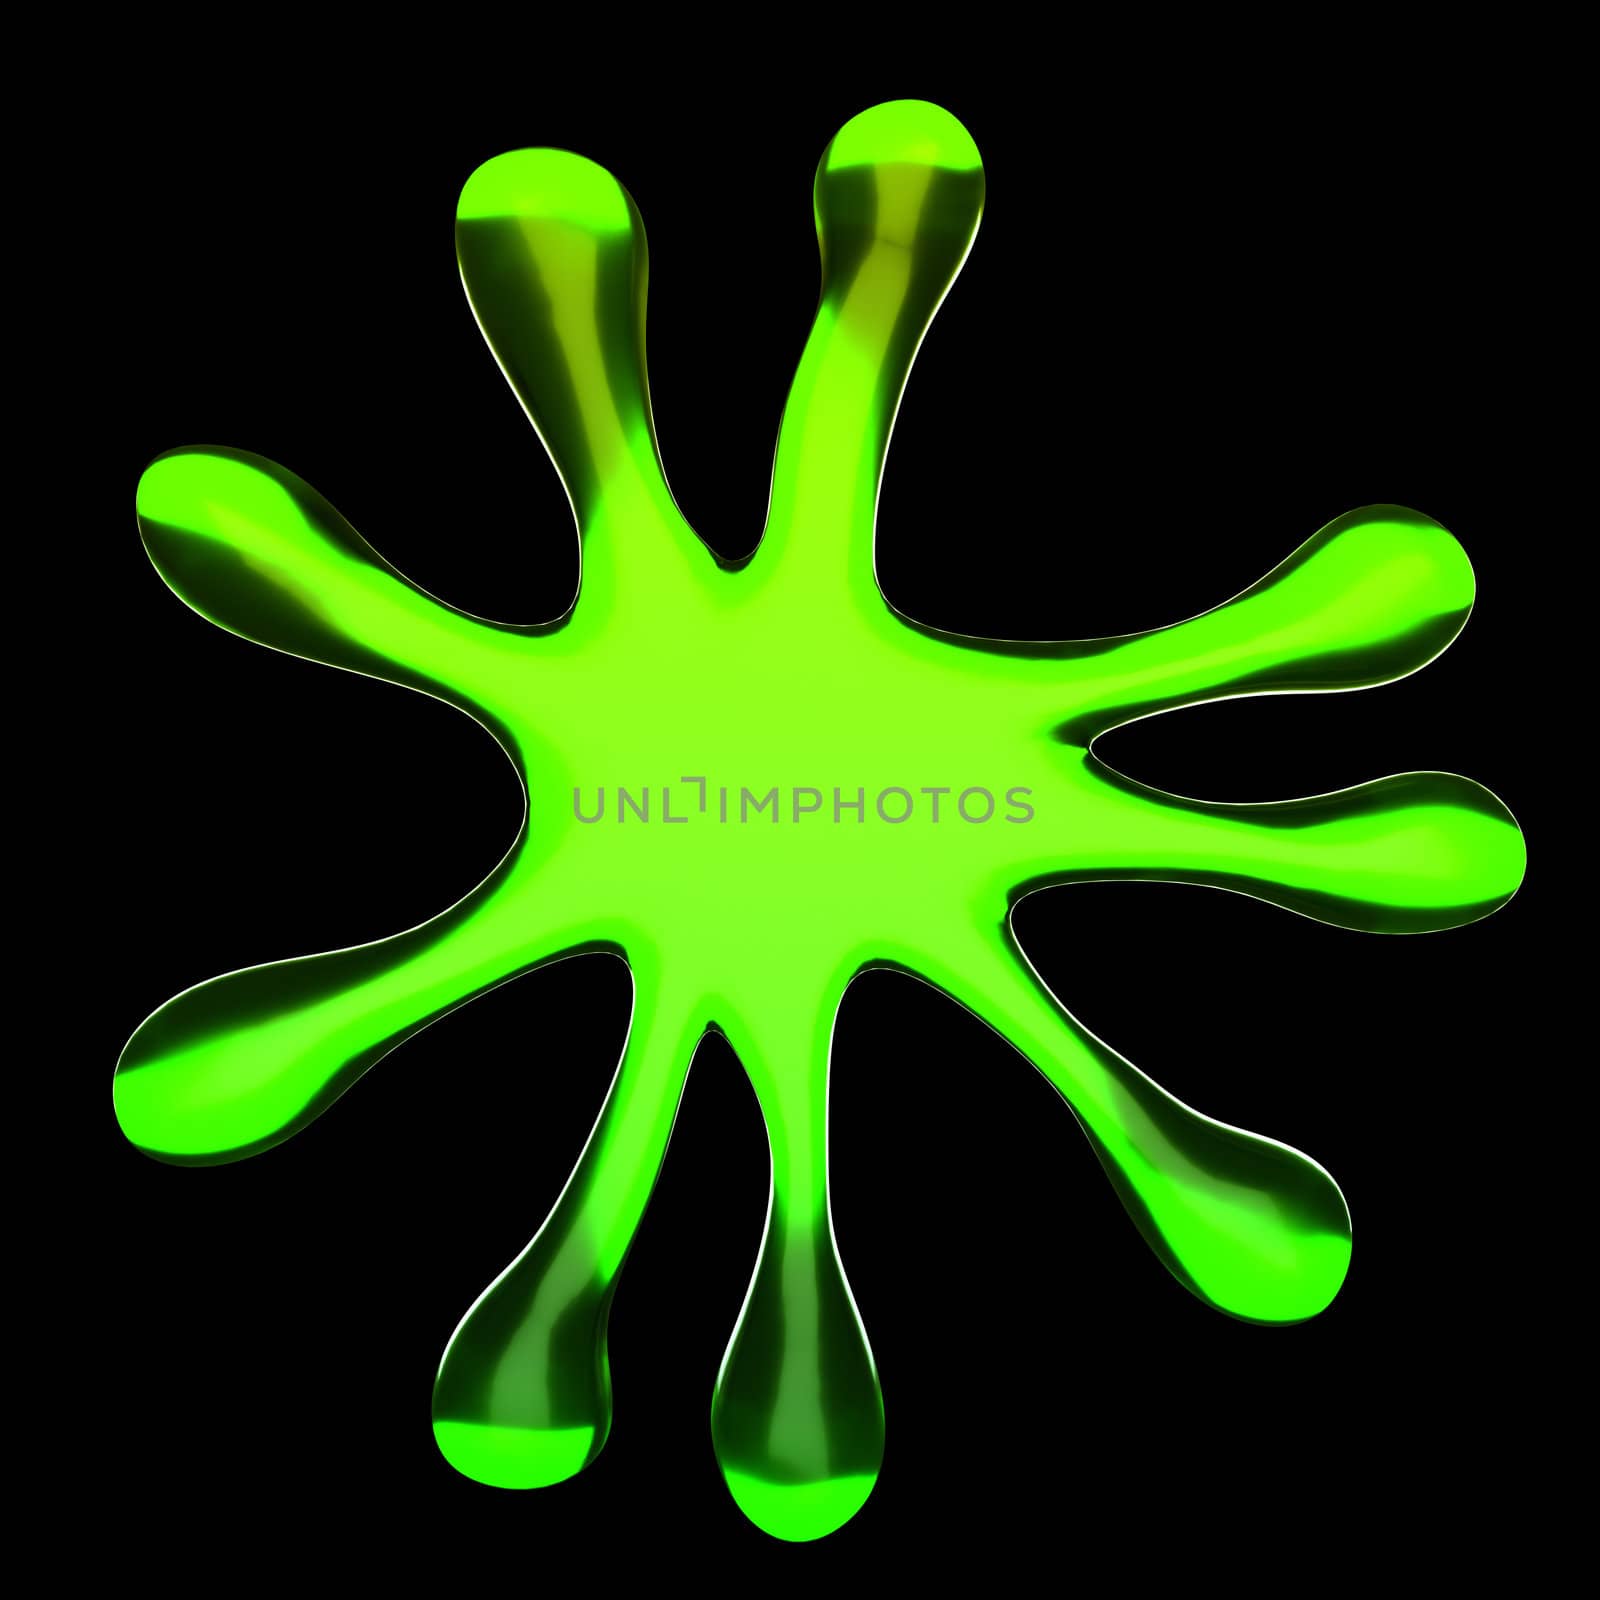 Green fluid splash also like a microbe. Large resolution